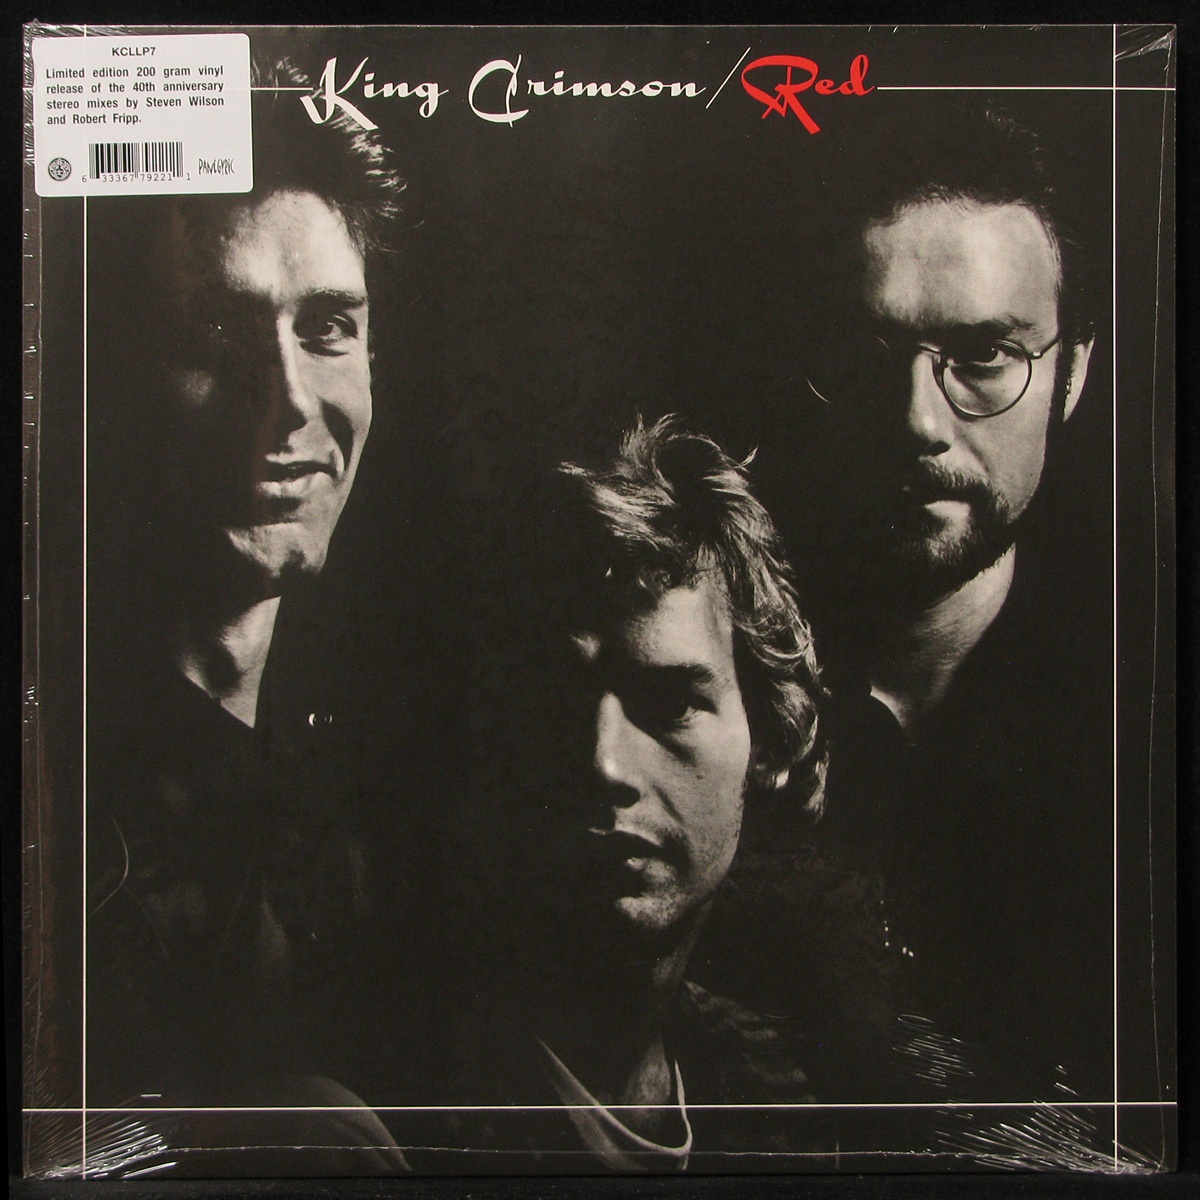 LP King Crimson — Red фото